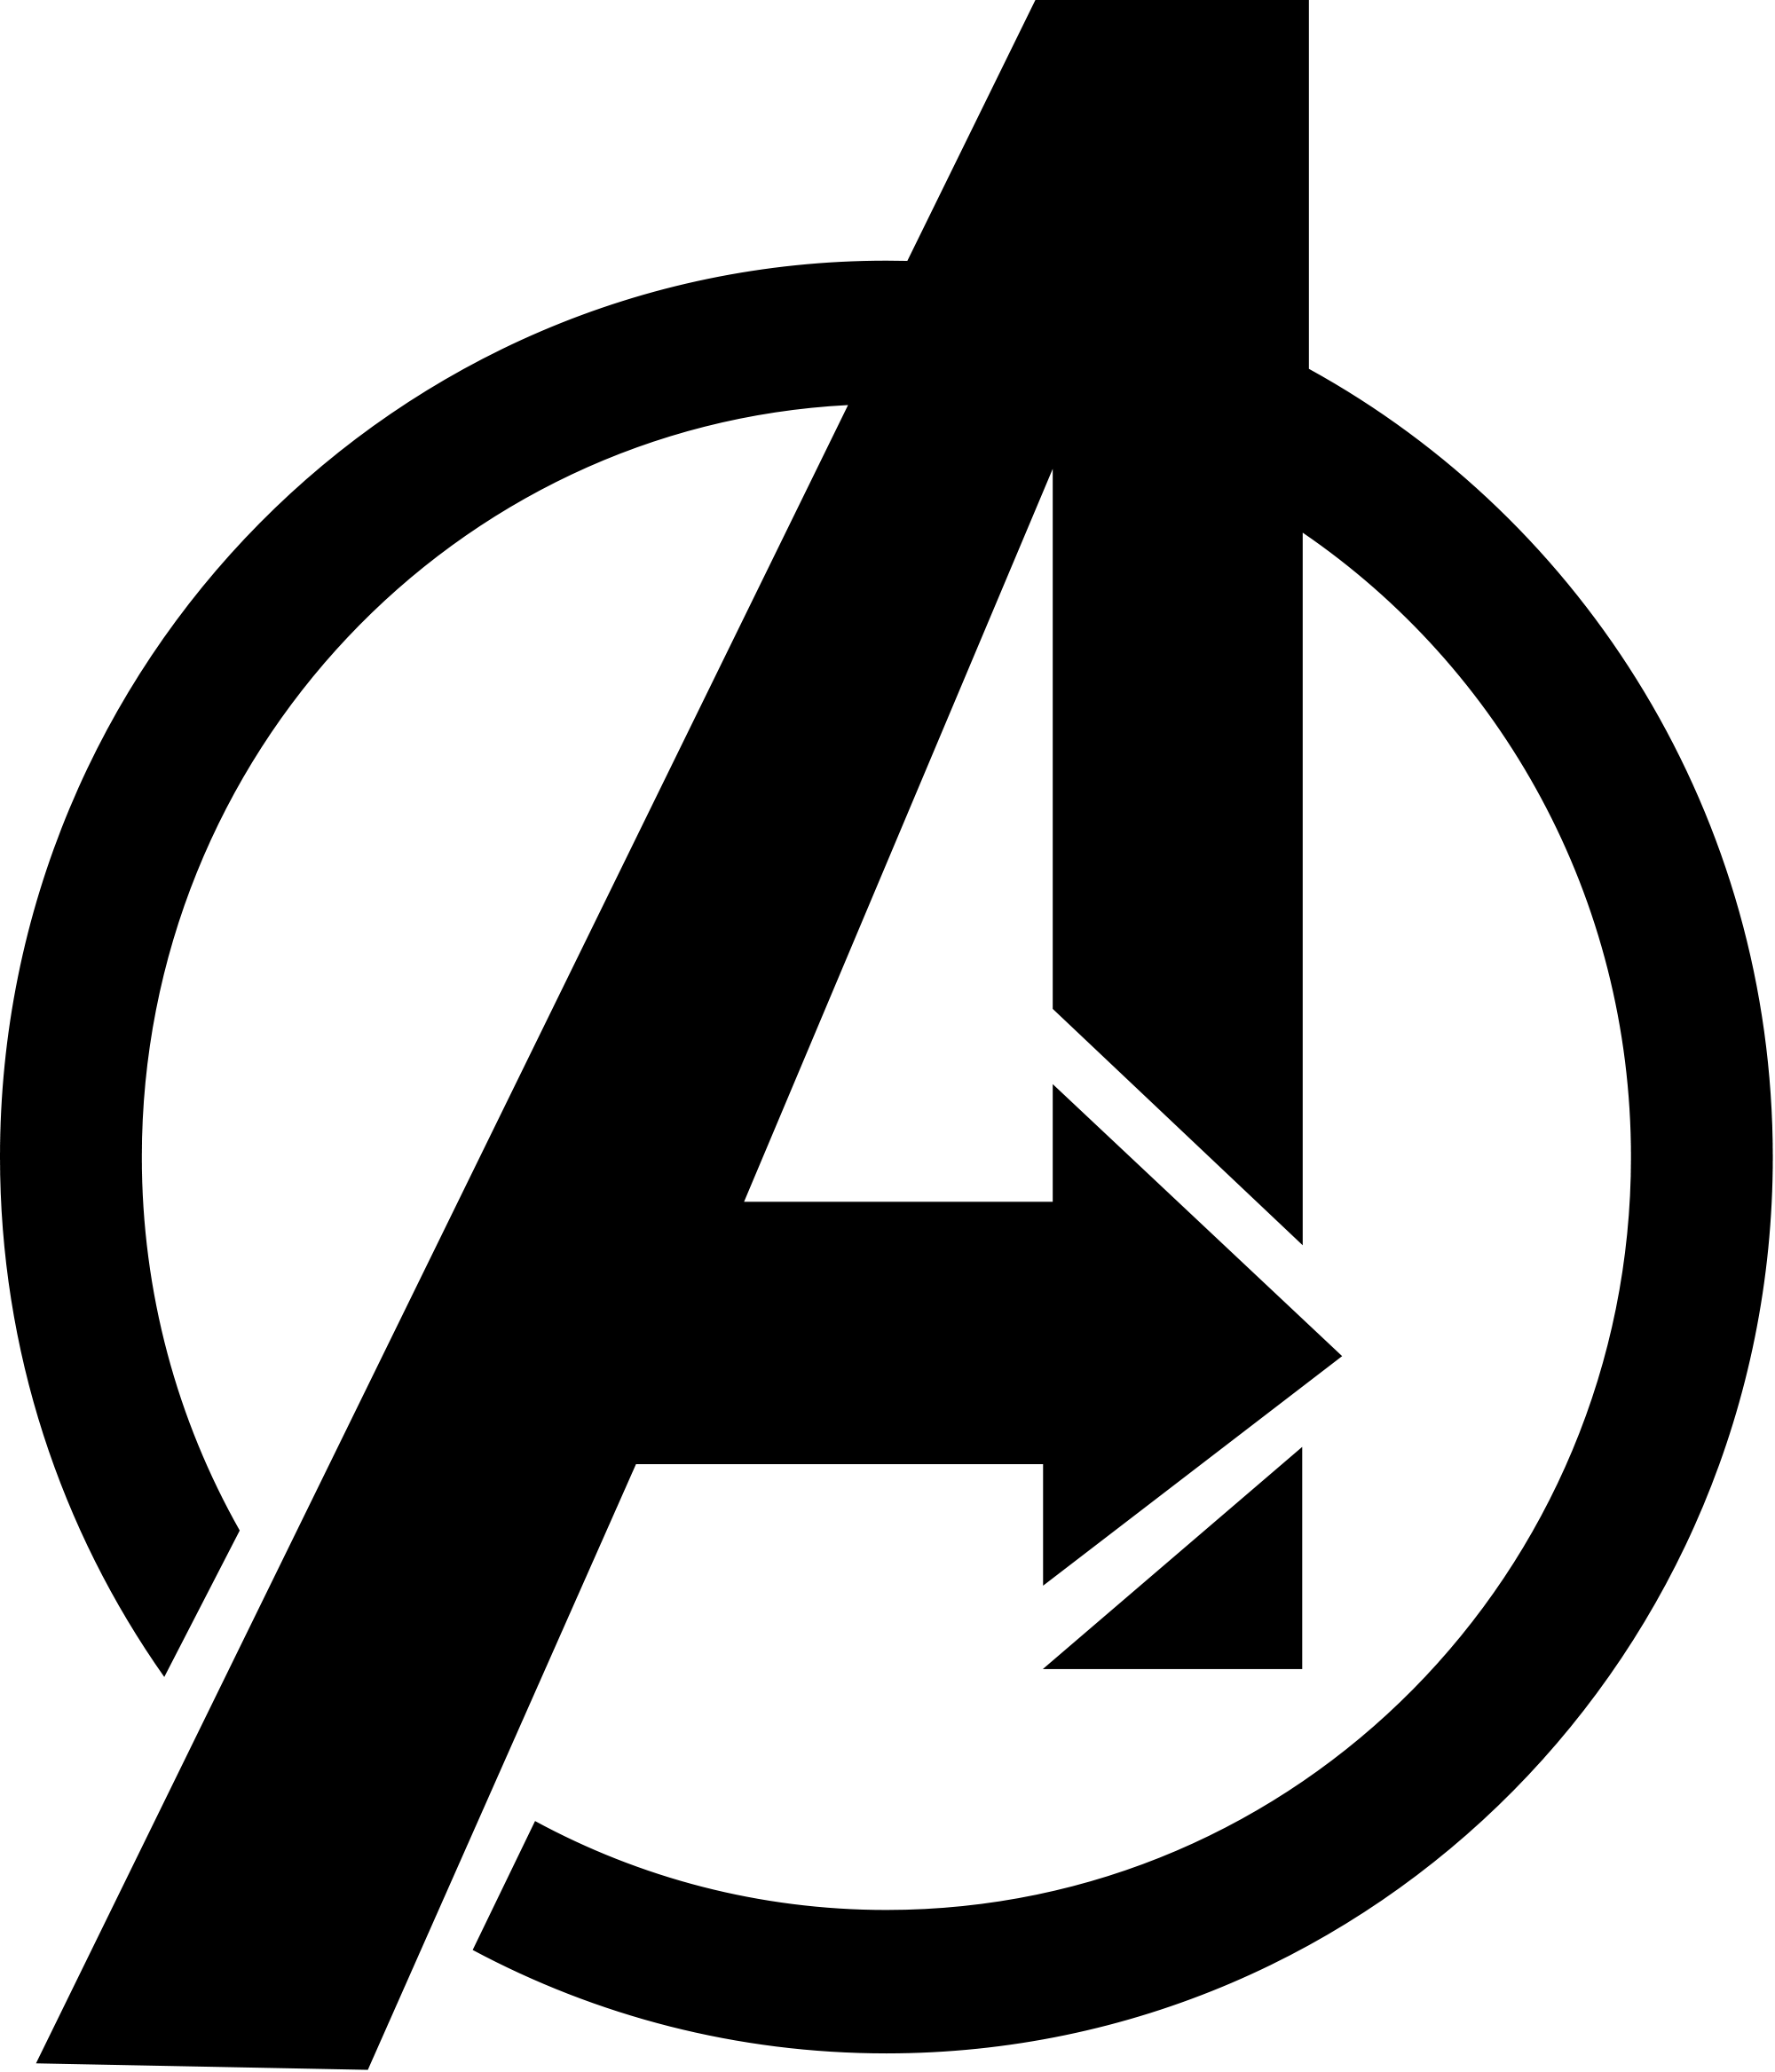 The Avengers Black and White Logo - File:Symbol from Marvel's The Avengers logo.svg - Wikimedia Commons